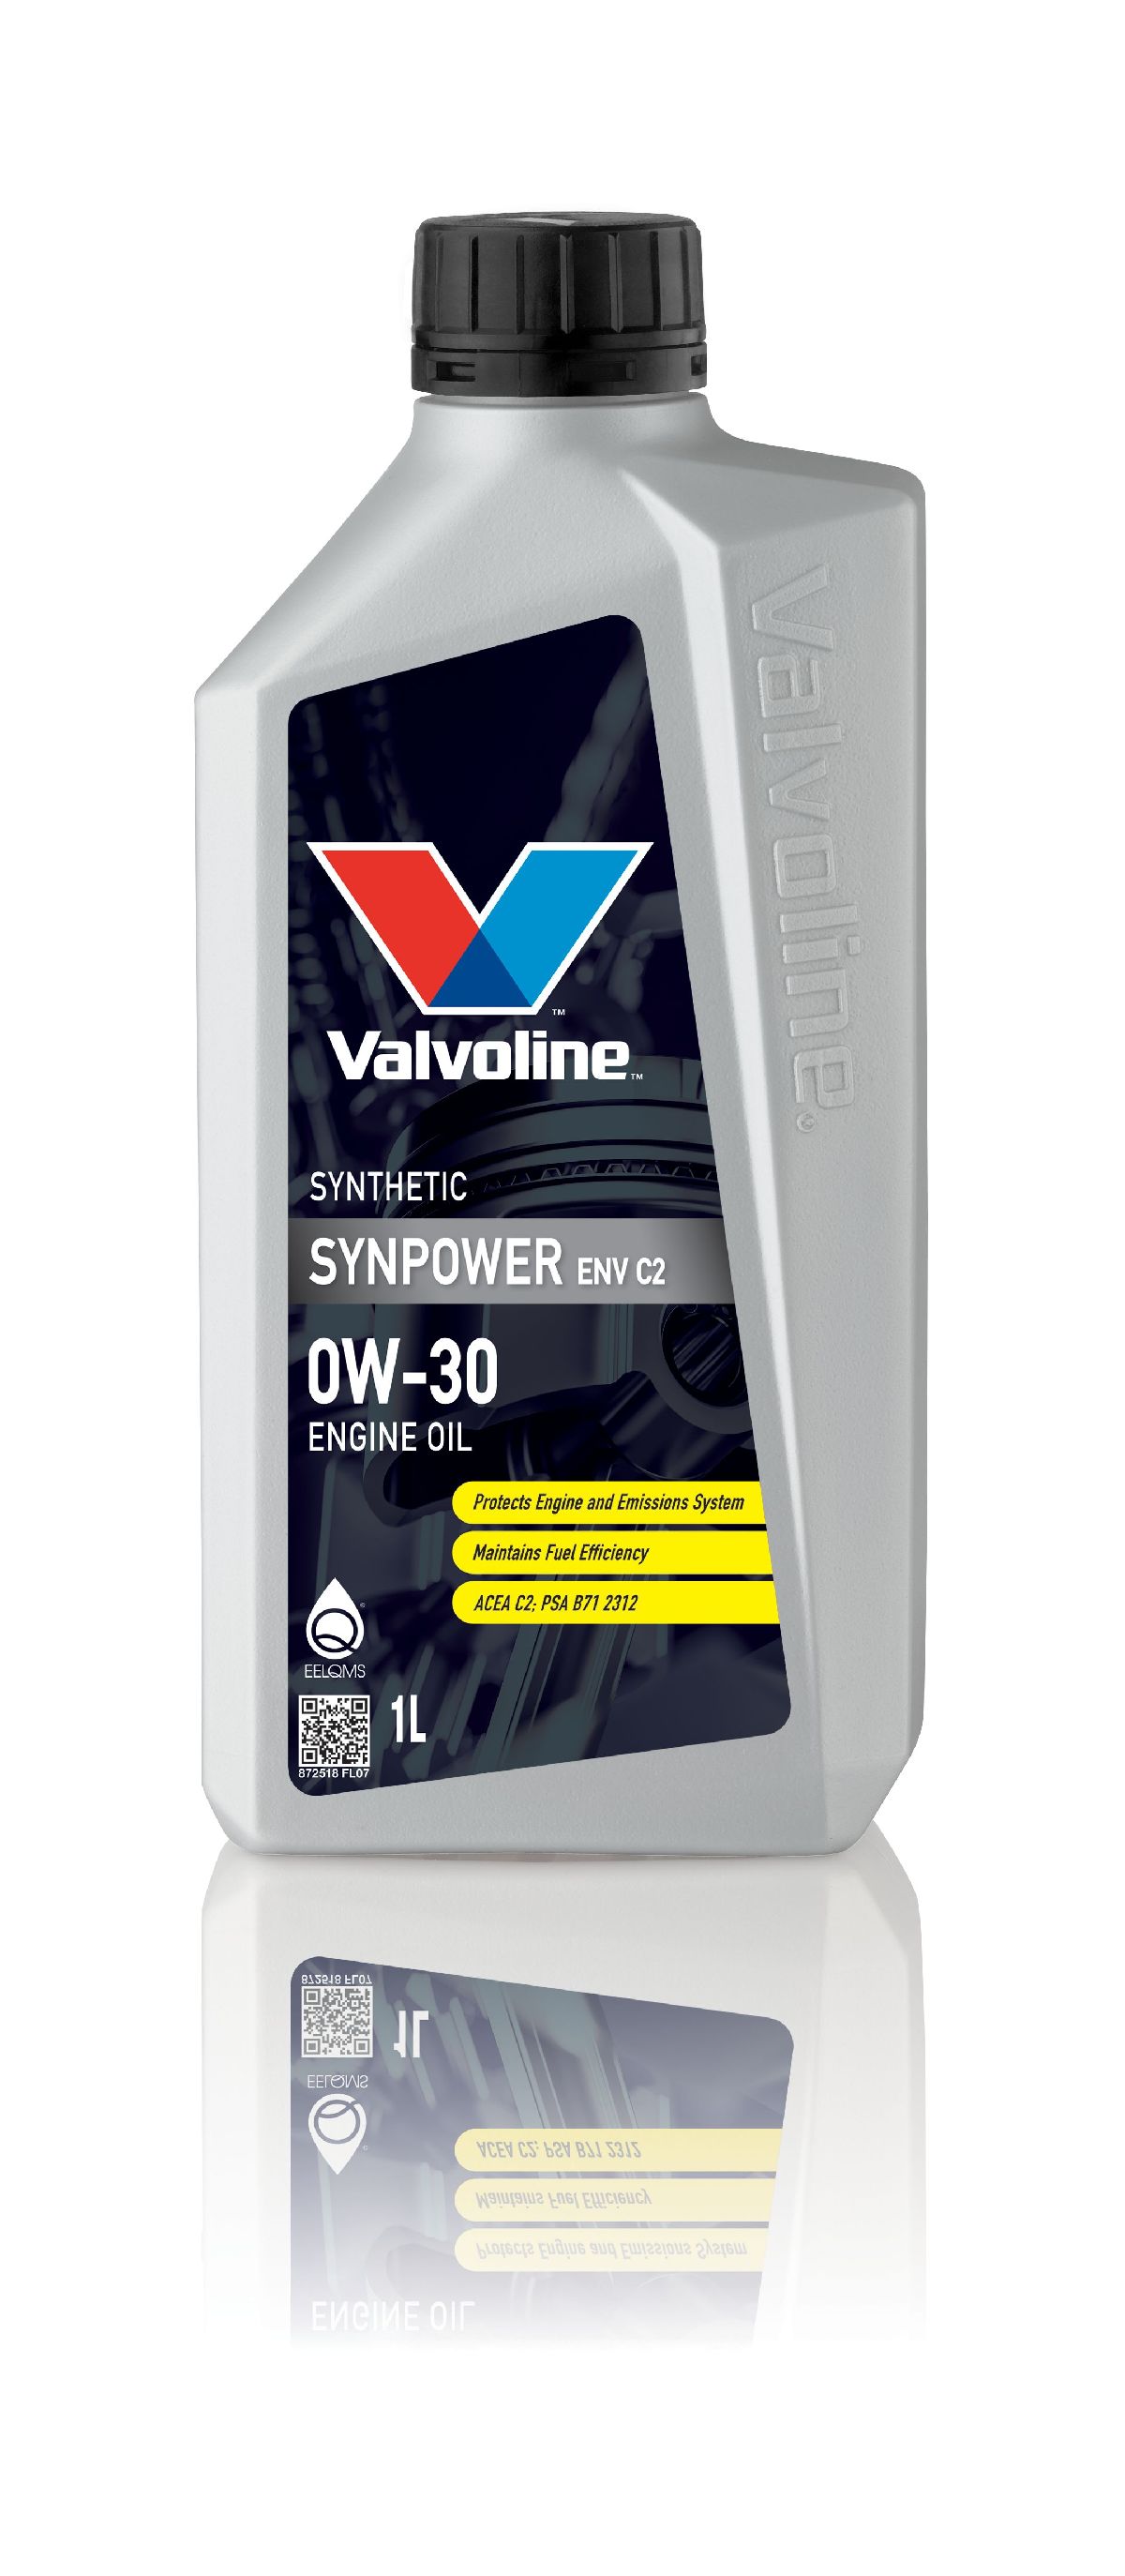 Valvoline Synpower ENV C2 0W-30